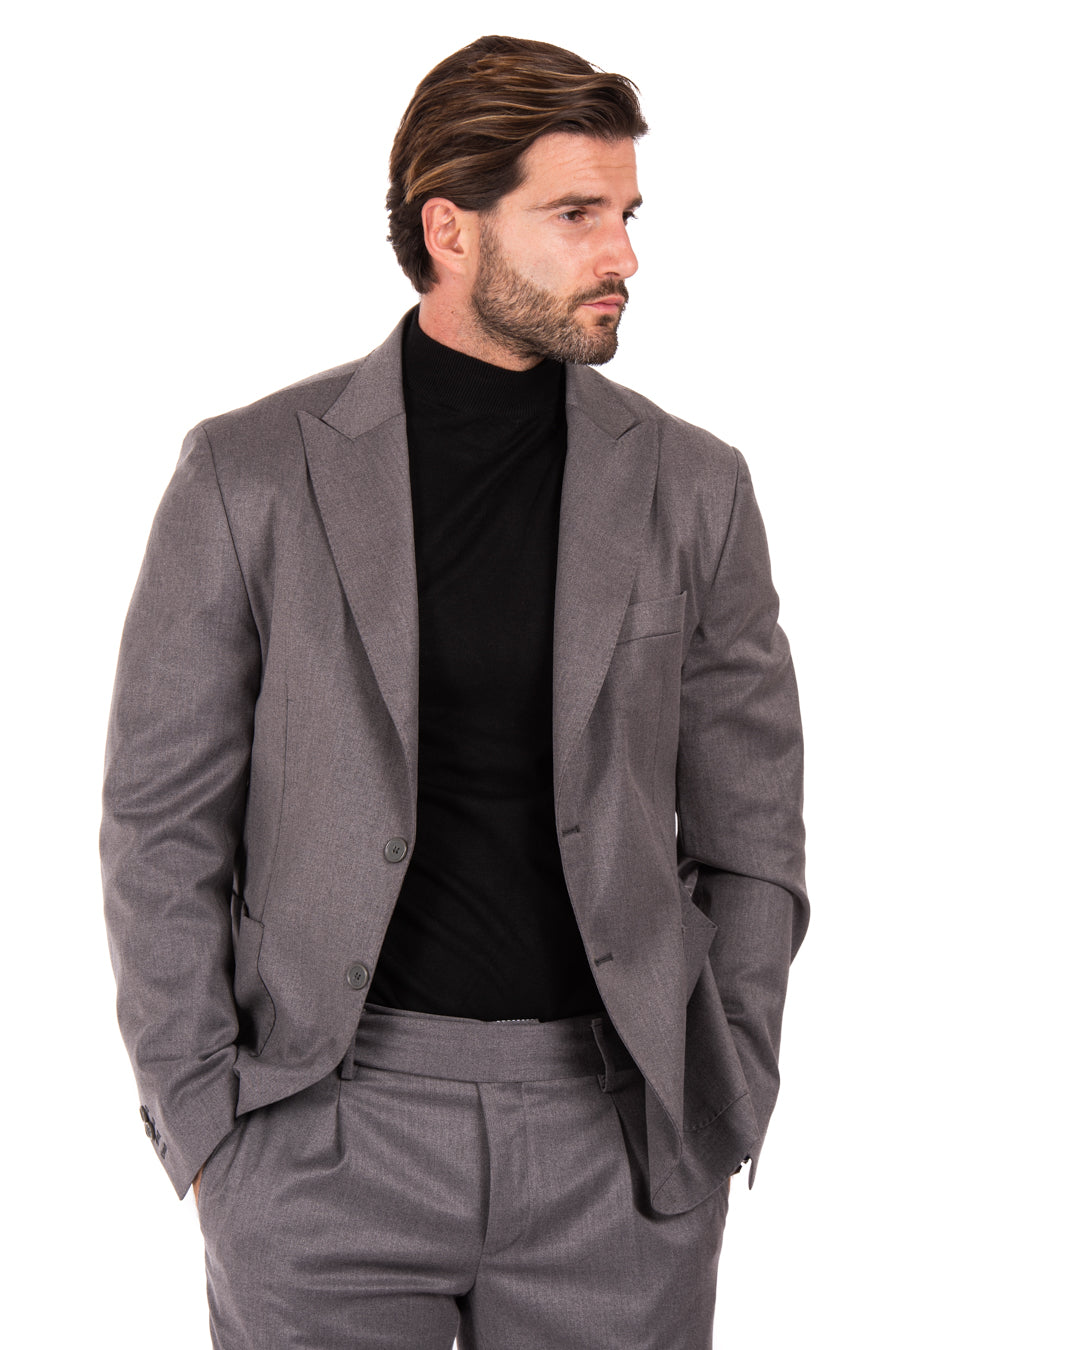 Bond - giacca doppia impuntura grigio